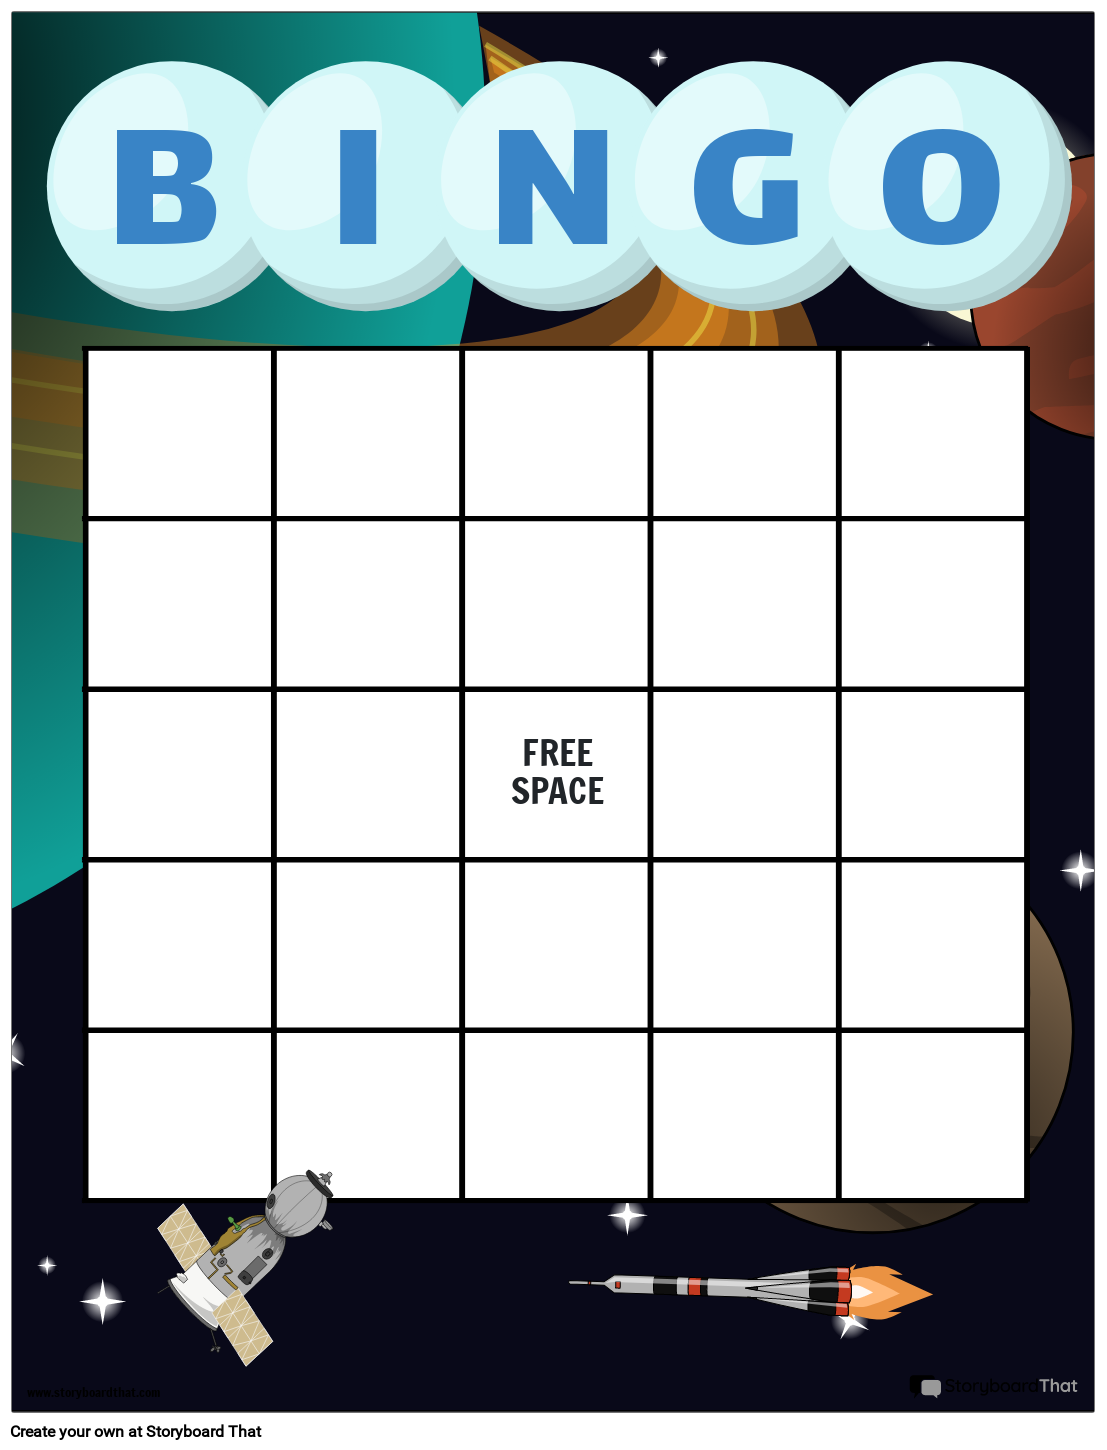 bingo-board-2-storyboard-by-templates